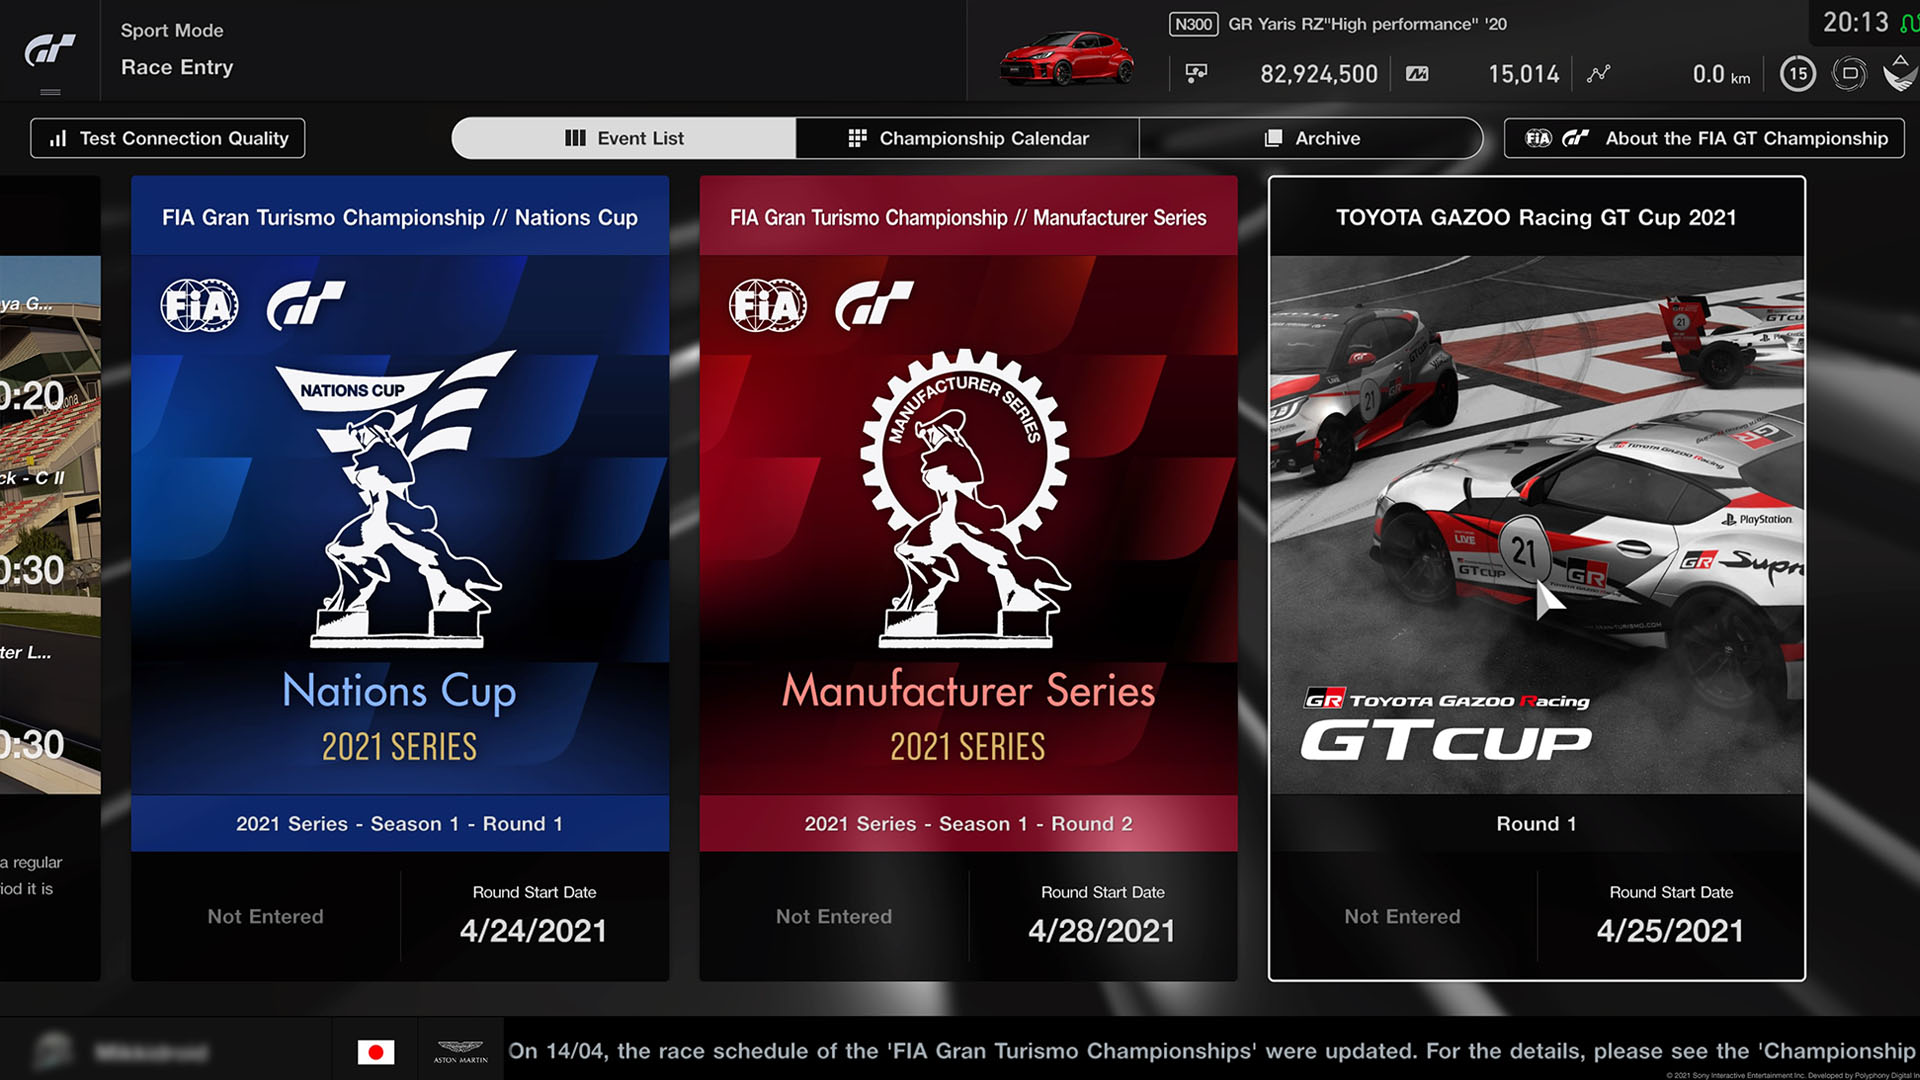 Select “TOYOTA GAZOO Racing GT Cup”